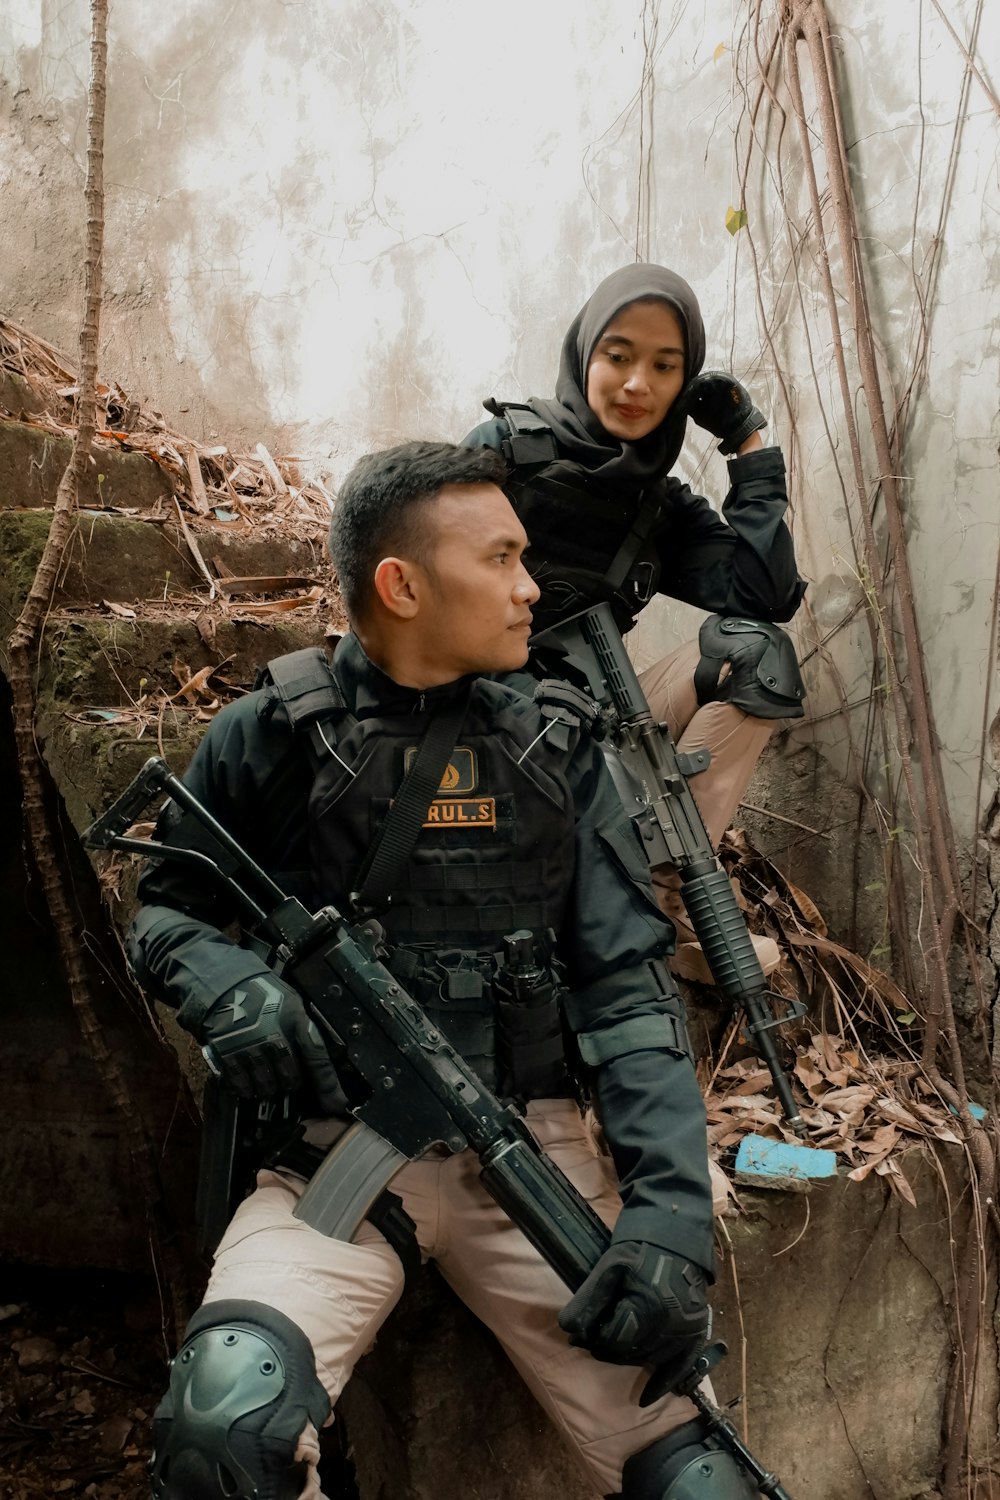 a man holding a gun and a woman in a helmet